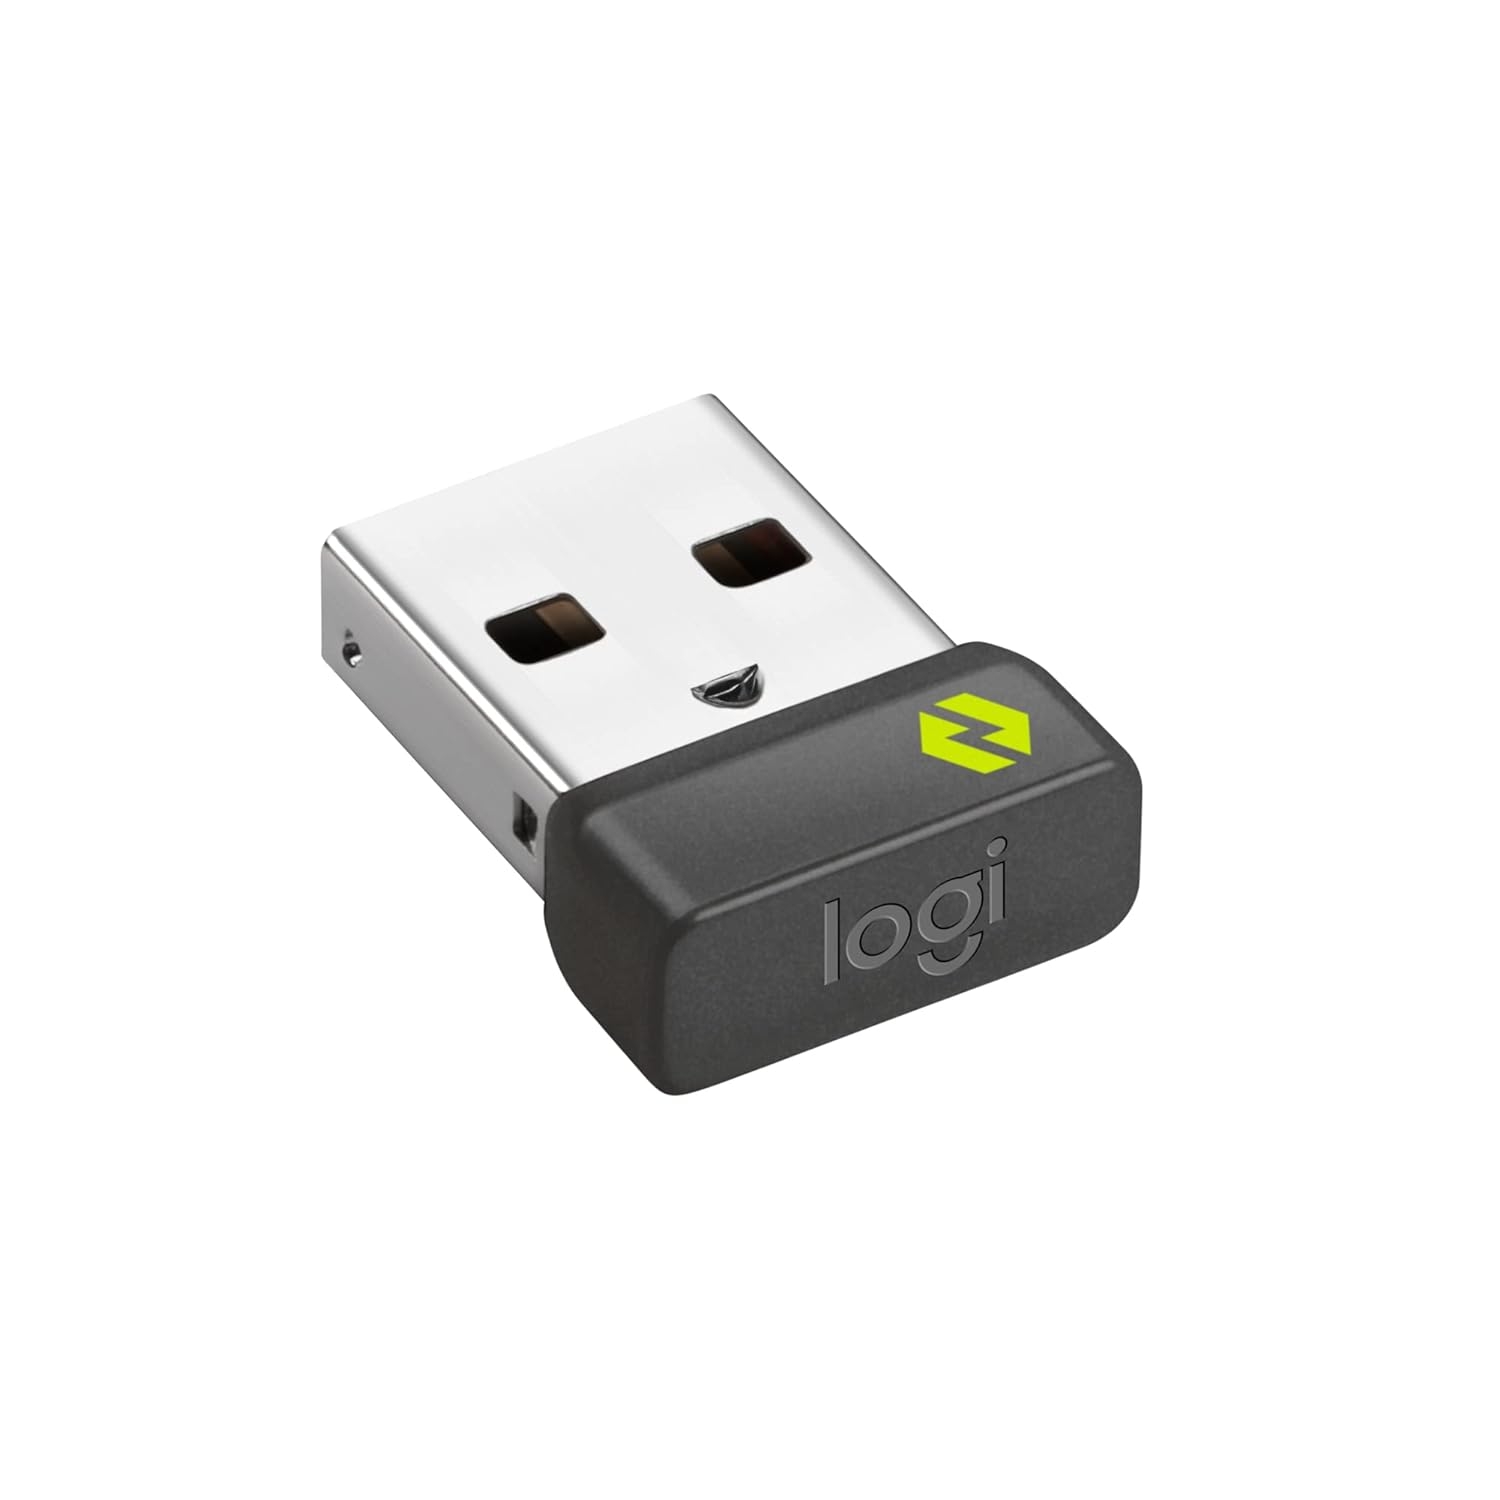 Logitech Bolt USB Receiver, 2.4 GHz Wireless Technology, USB Plug | All Devices Like Wireless Mouse, Keyboard USB Gadgets